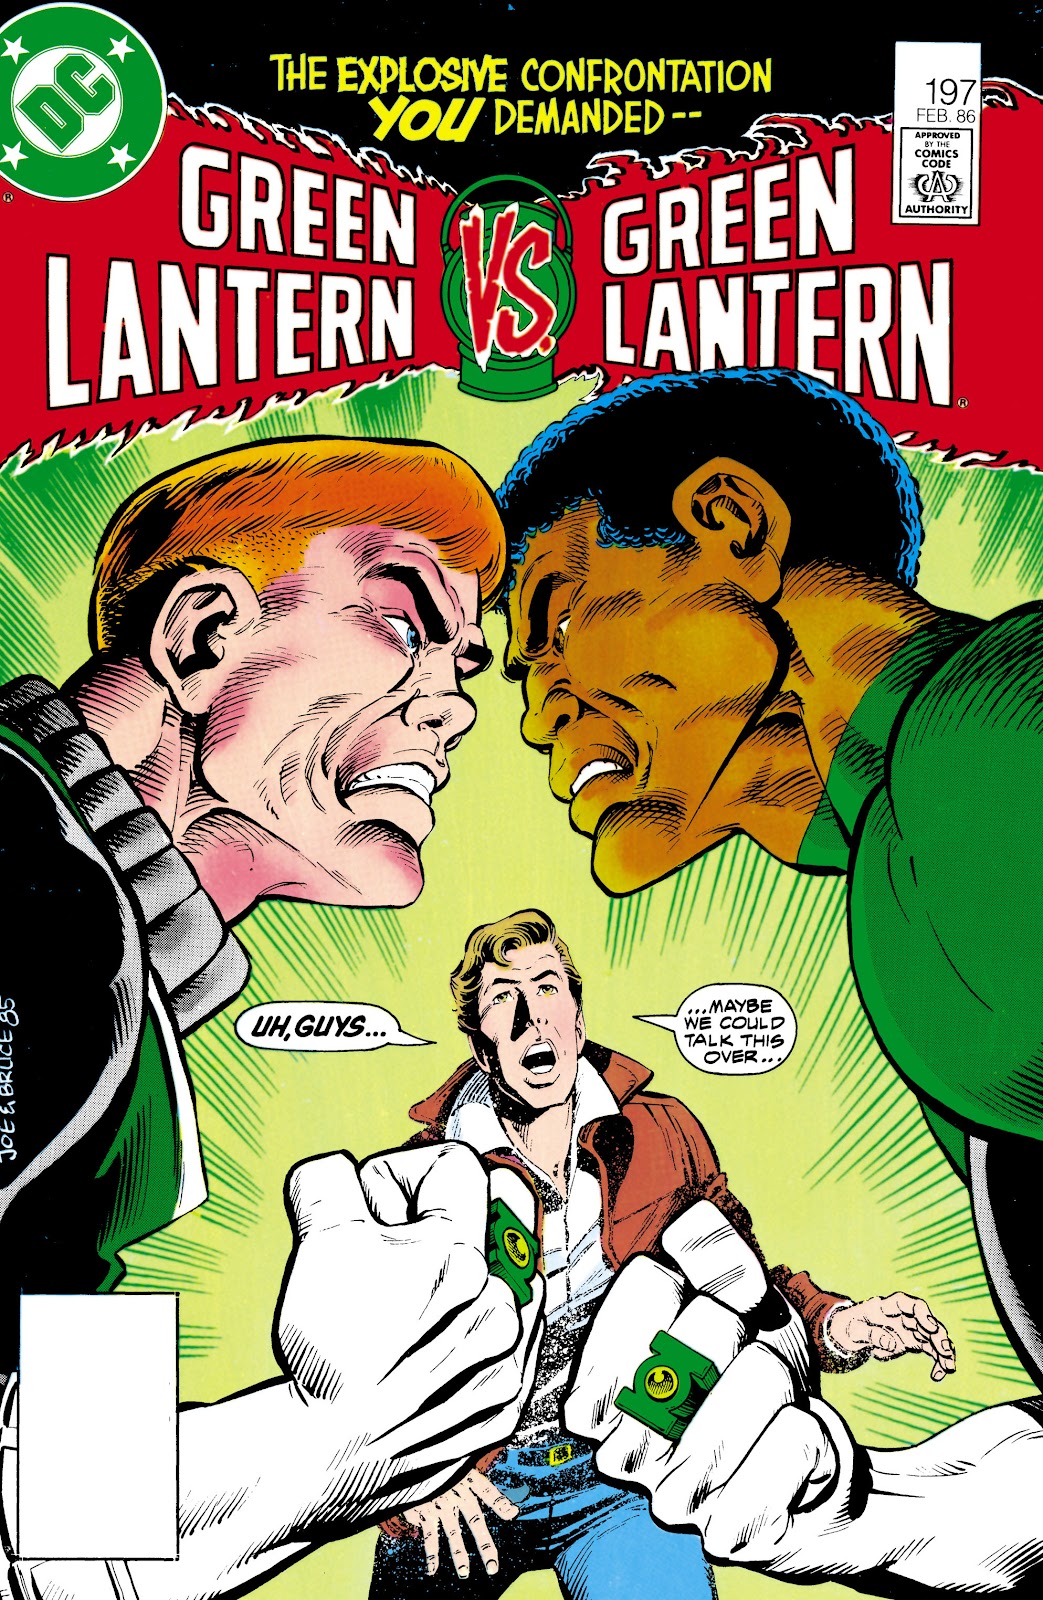 Green Lantern (1960) issue 197 - Page 1